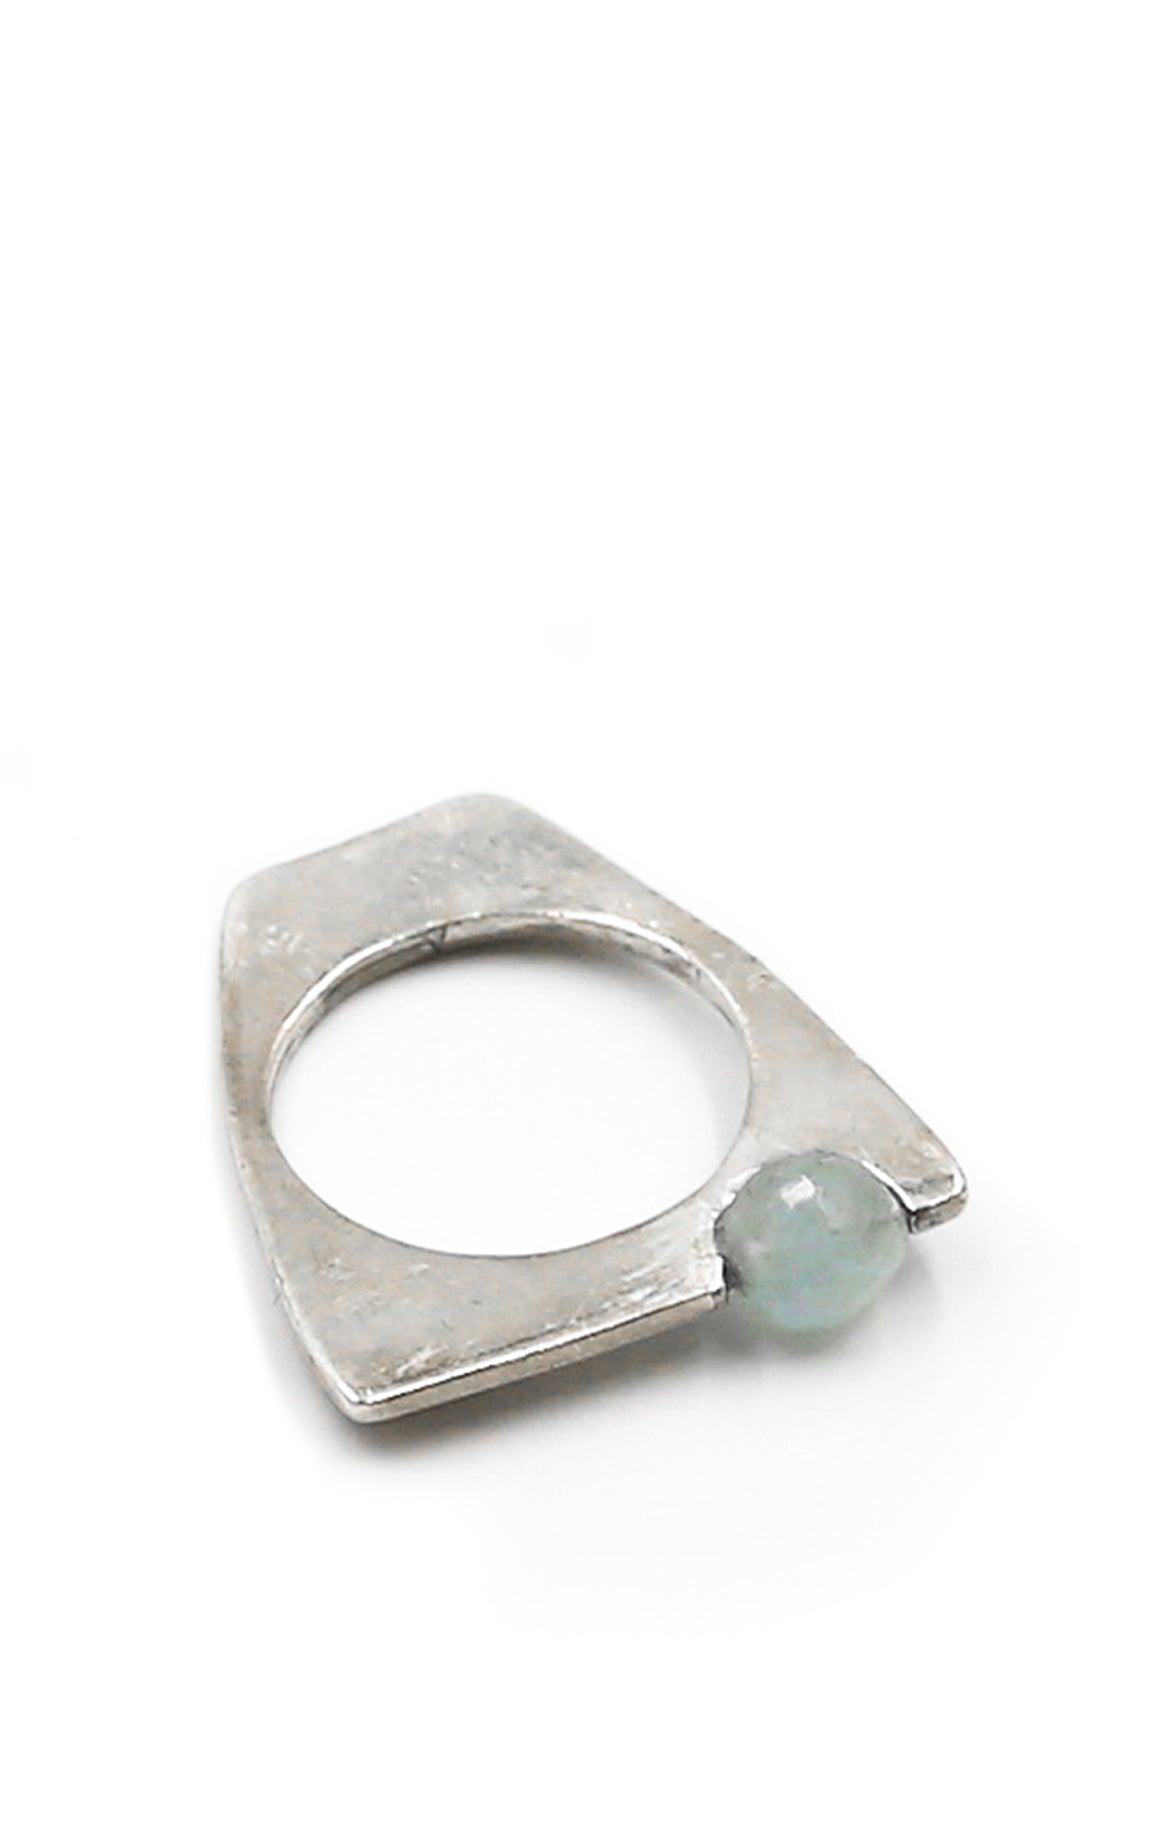 Aquamarine and Agate Ring Set